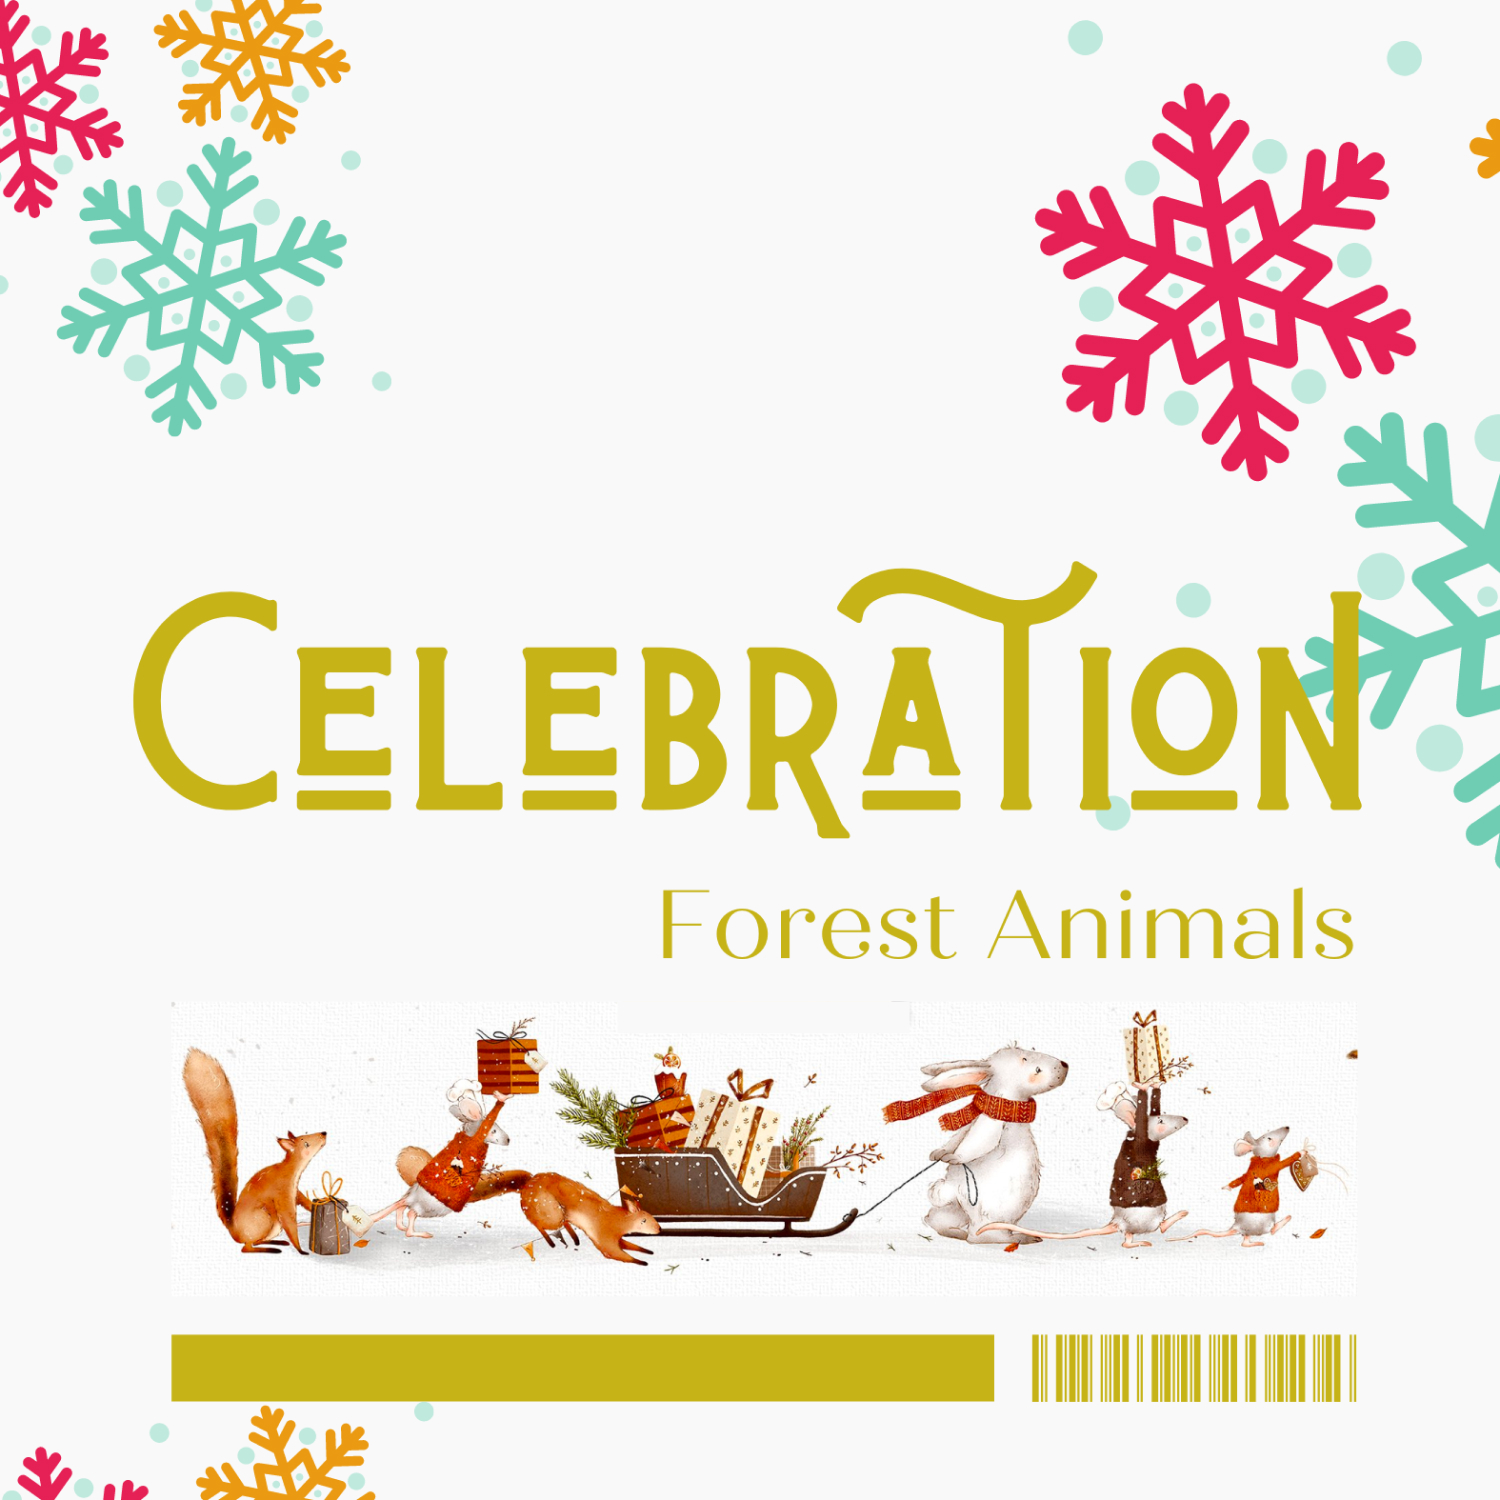 Forest Animals Celebration.